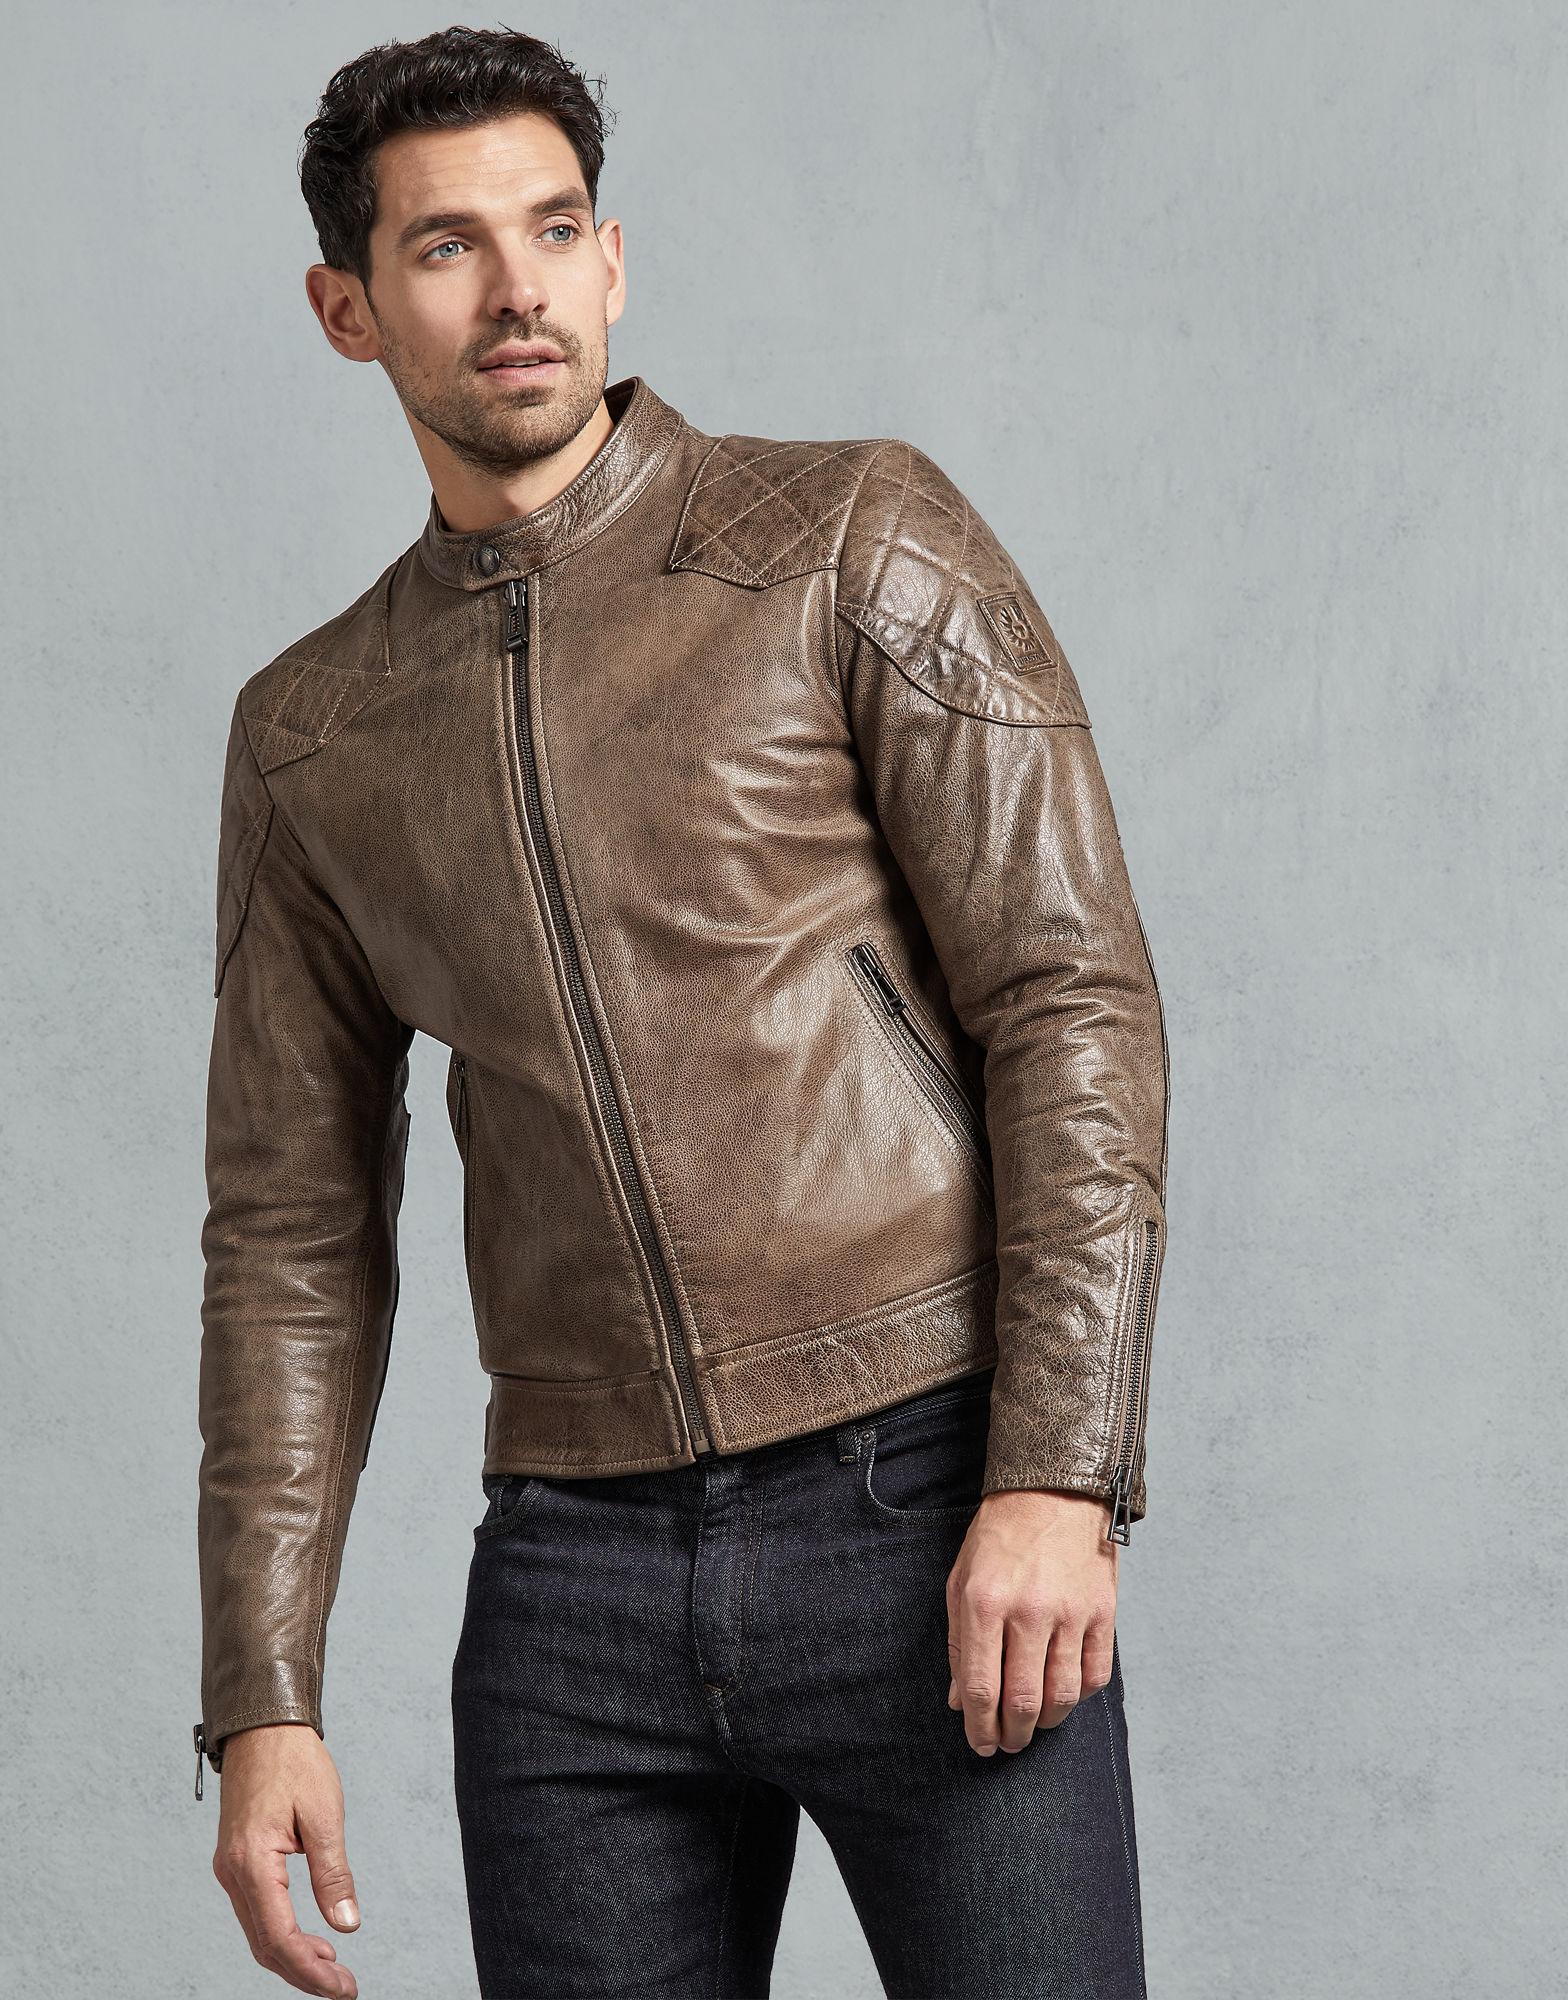 Belstaff Outlaw Leather Jacket for Men - Lyst